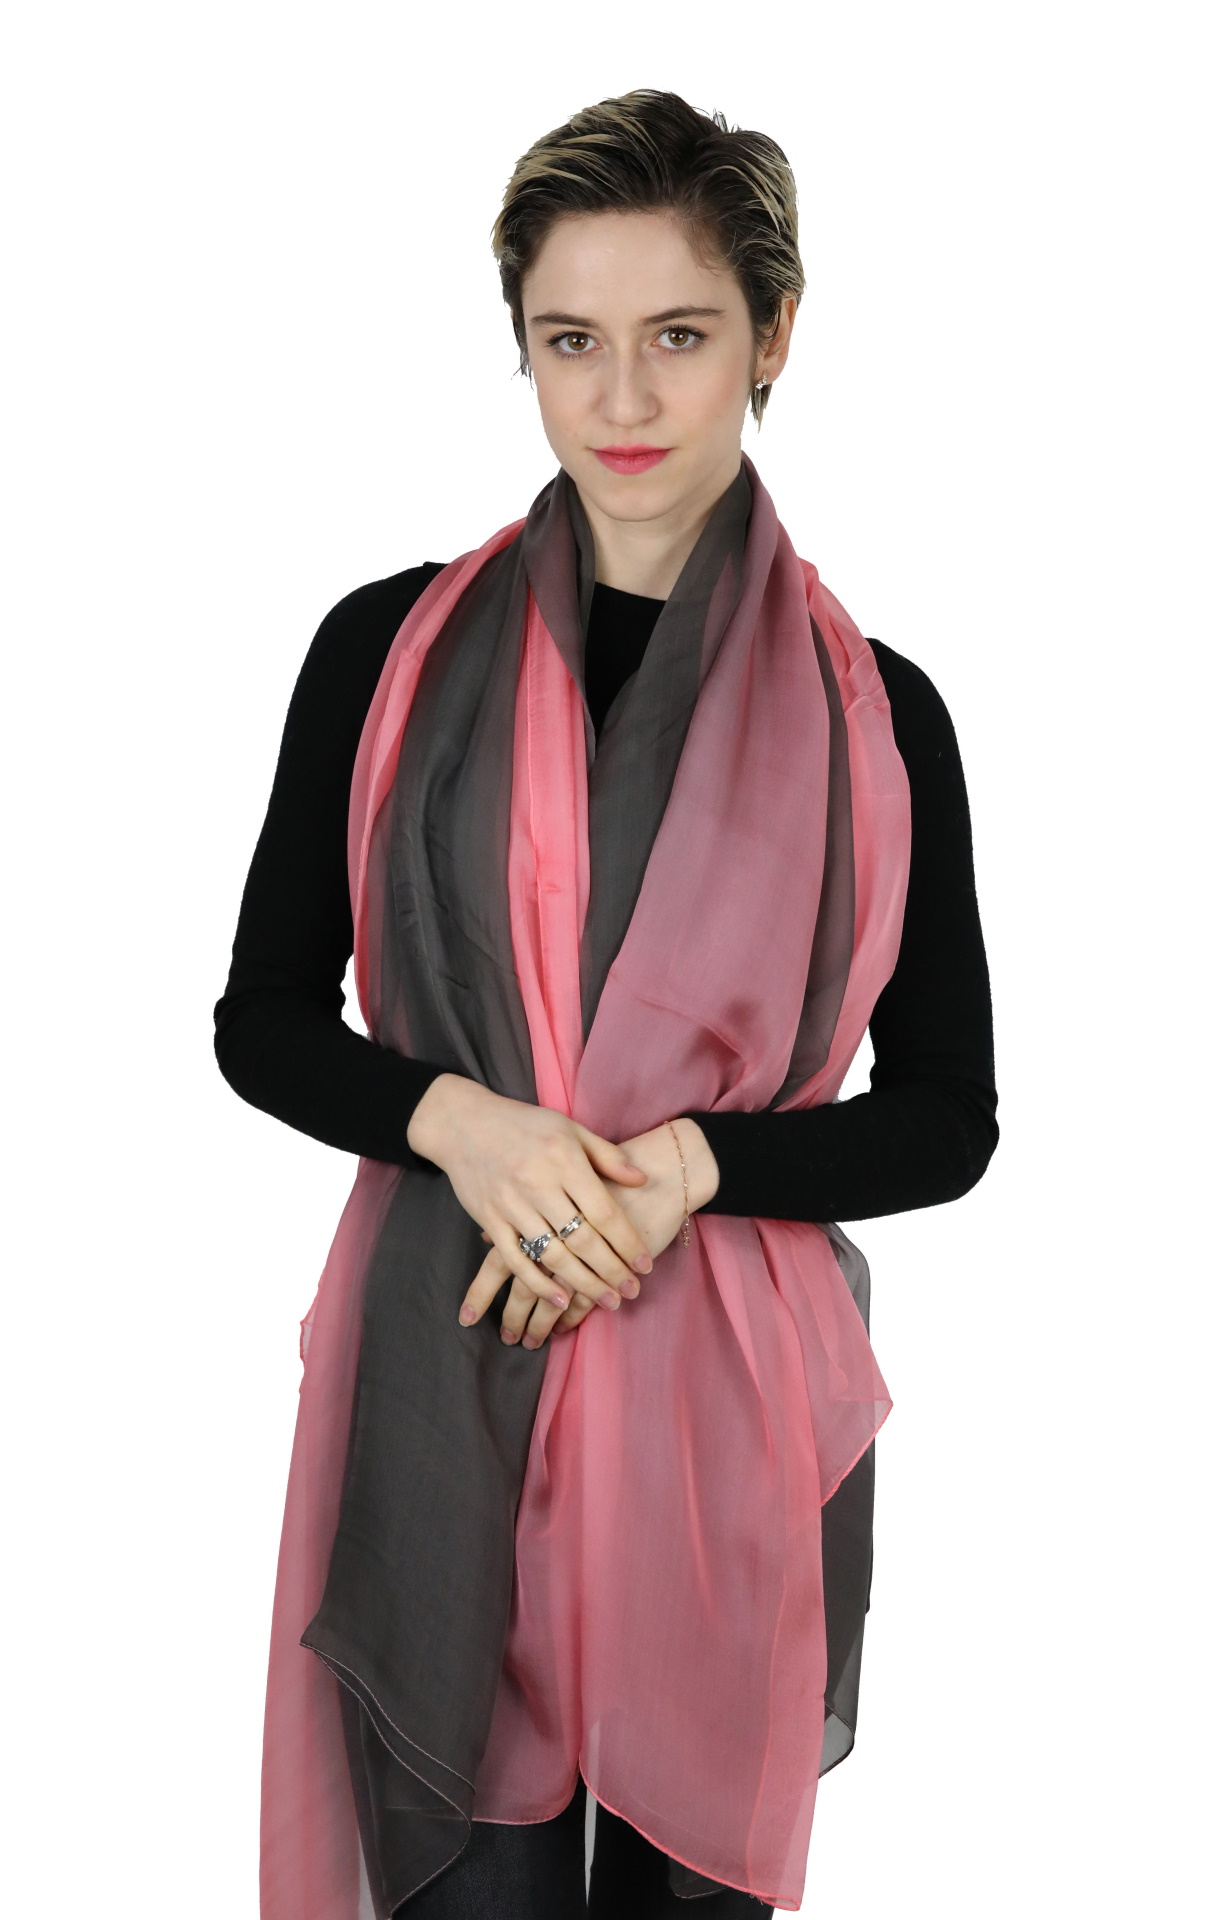 SILKCT24 FOULARD SCIARPA DONNA 100 SETA 110CMX180CM 1 1stAmerican foulard/sciarpa 100% seta da donna 110cmx180cm